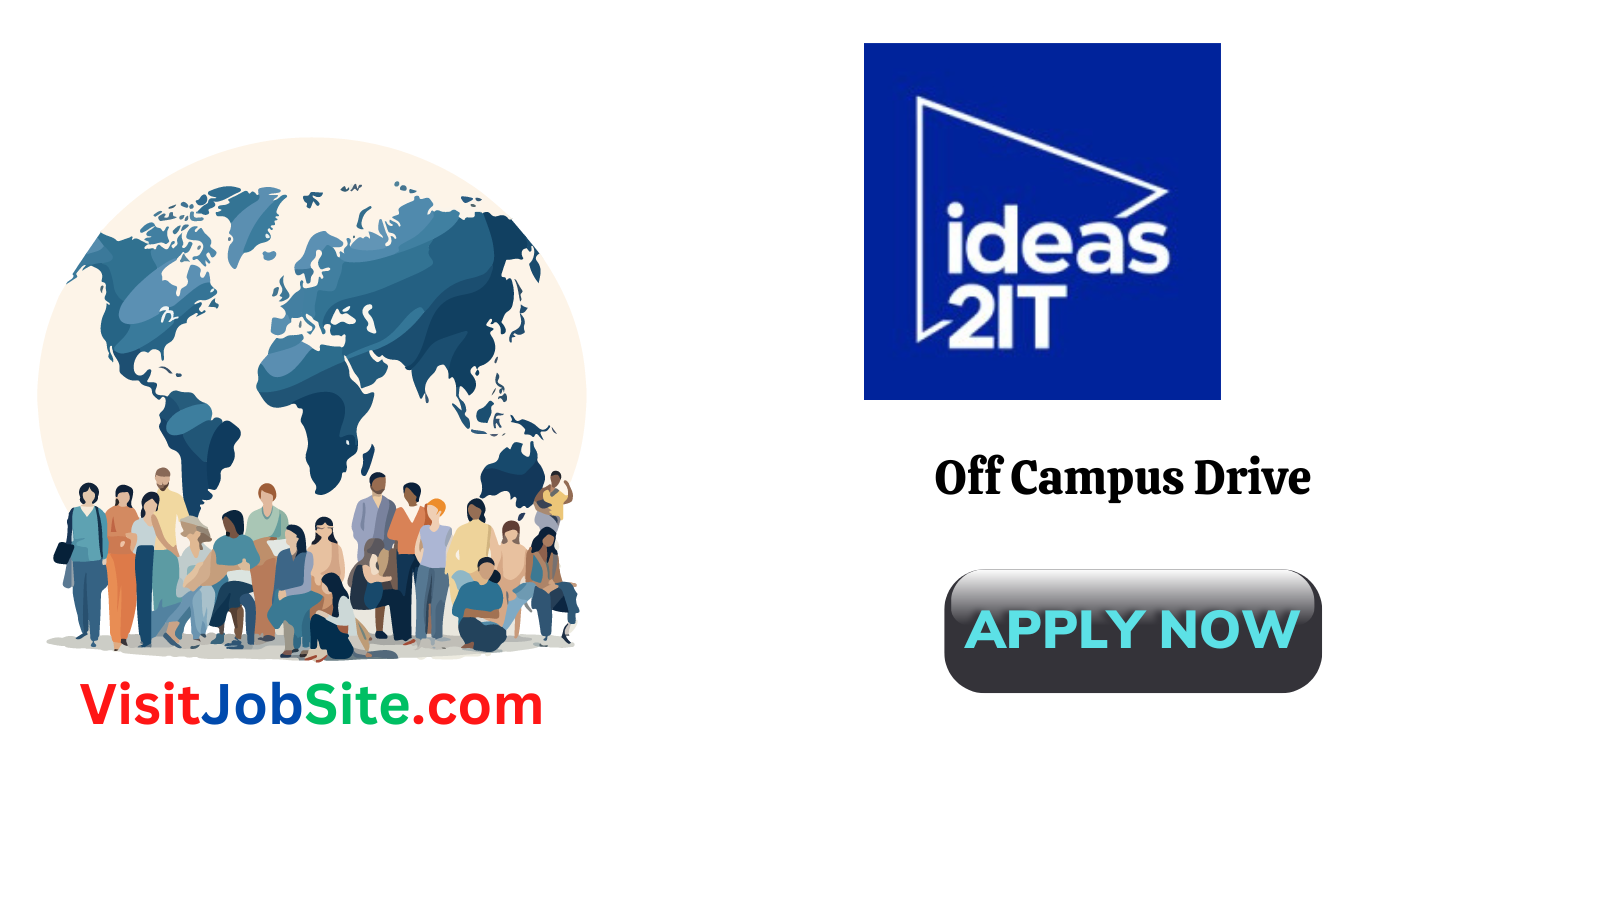 Ideas2IT Off Campus Drive